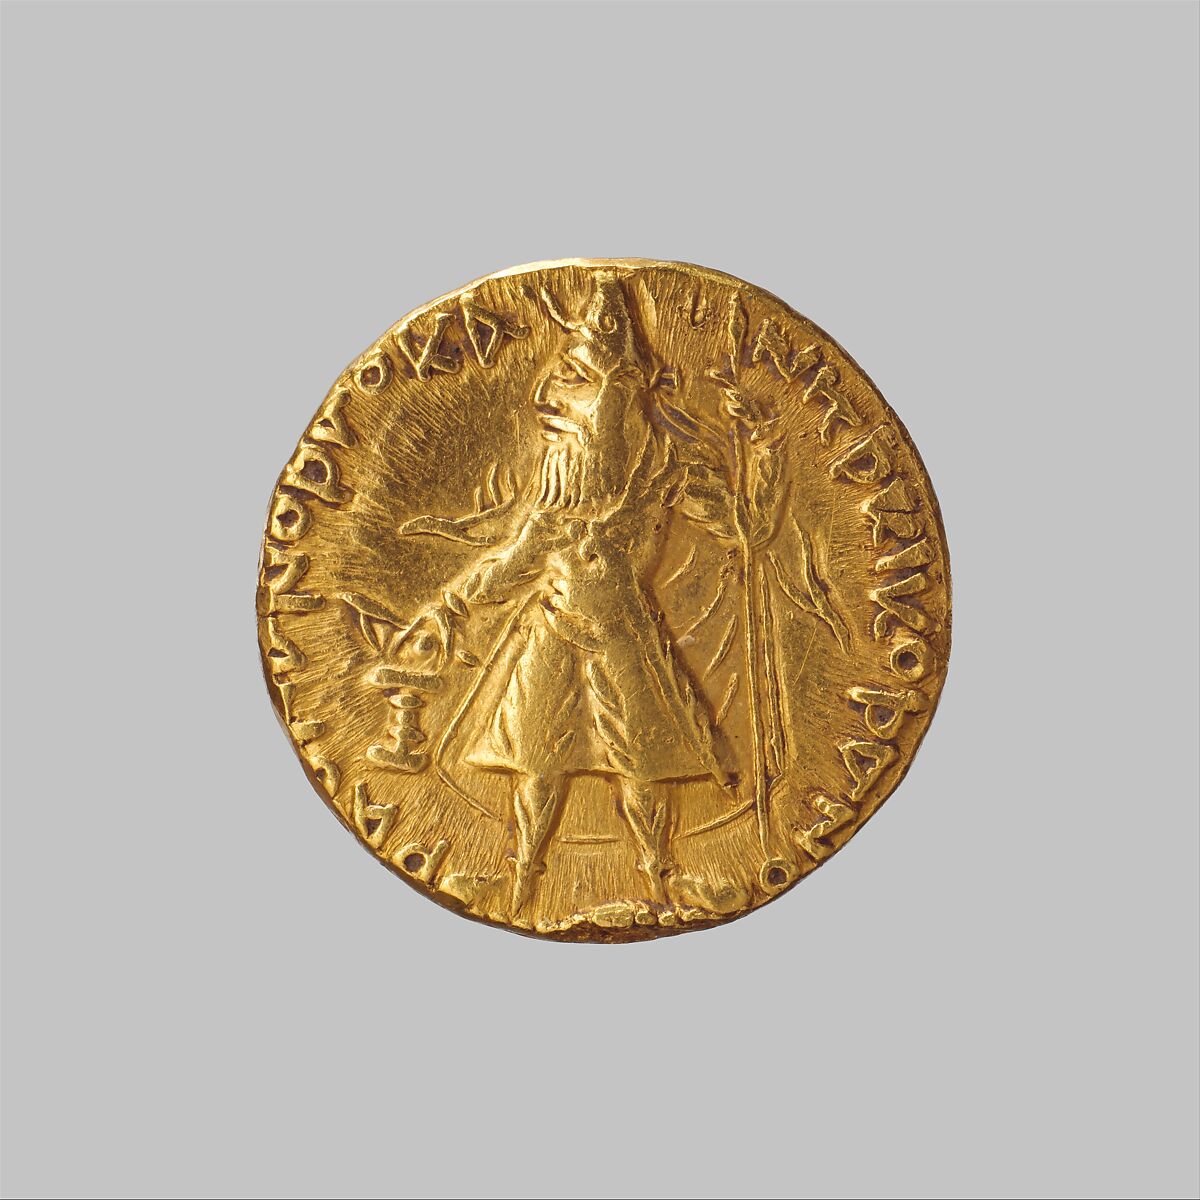 Coin of Kanishka